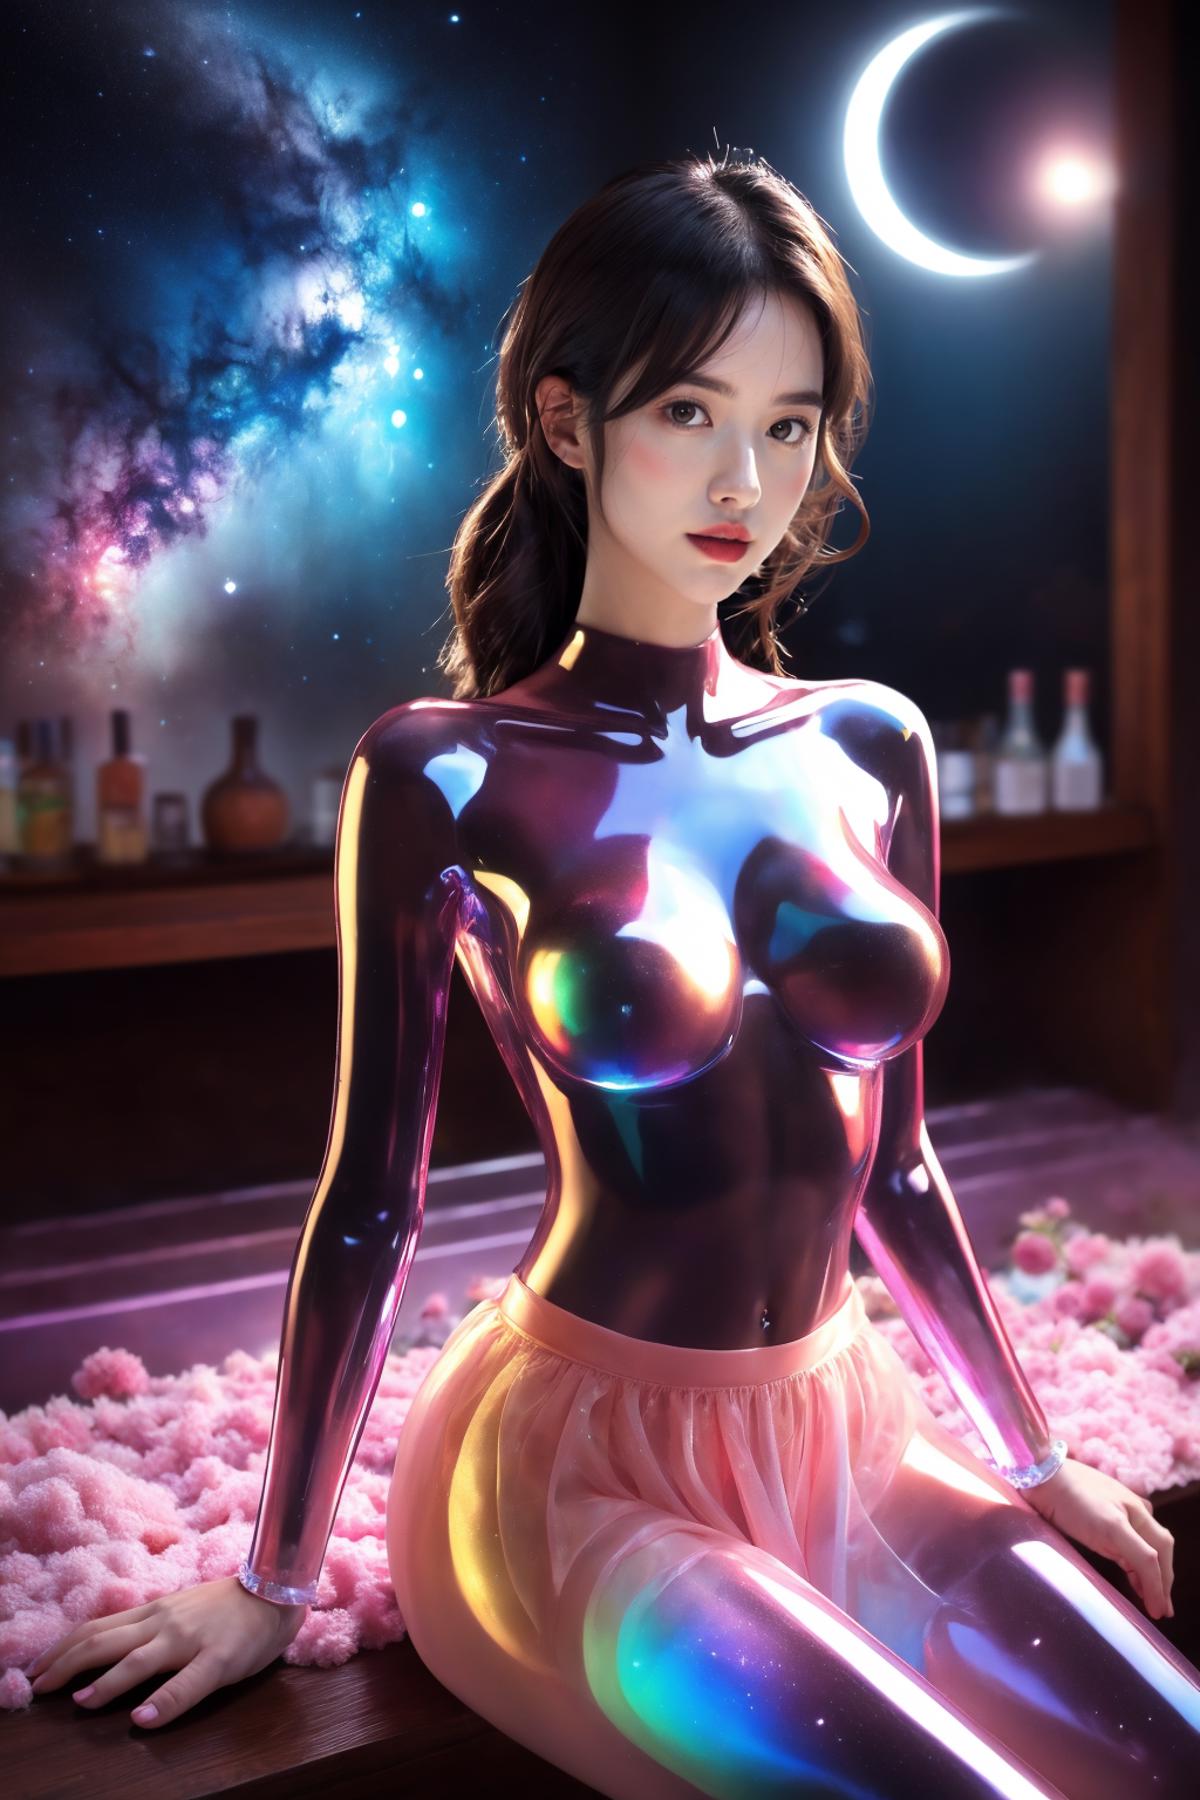 AI model image by kimchi88